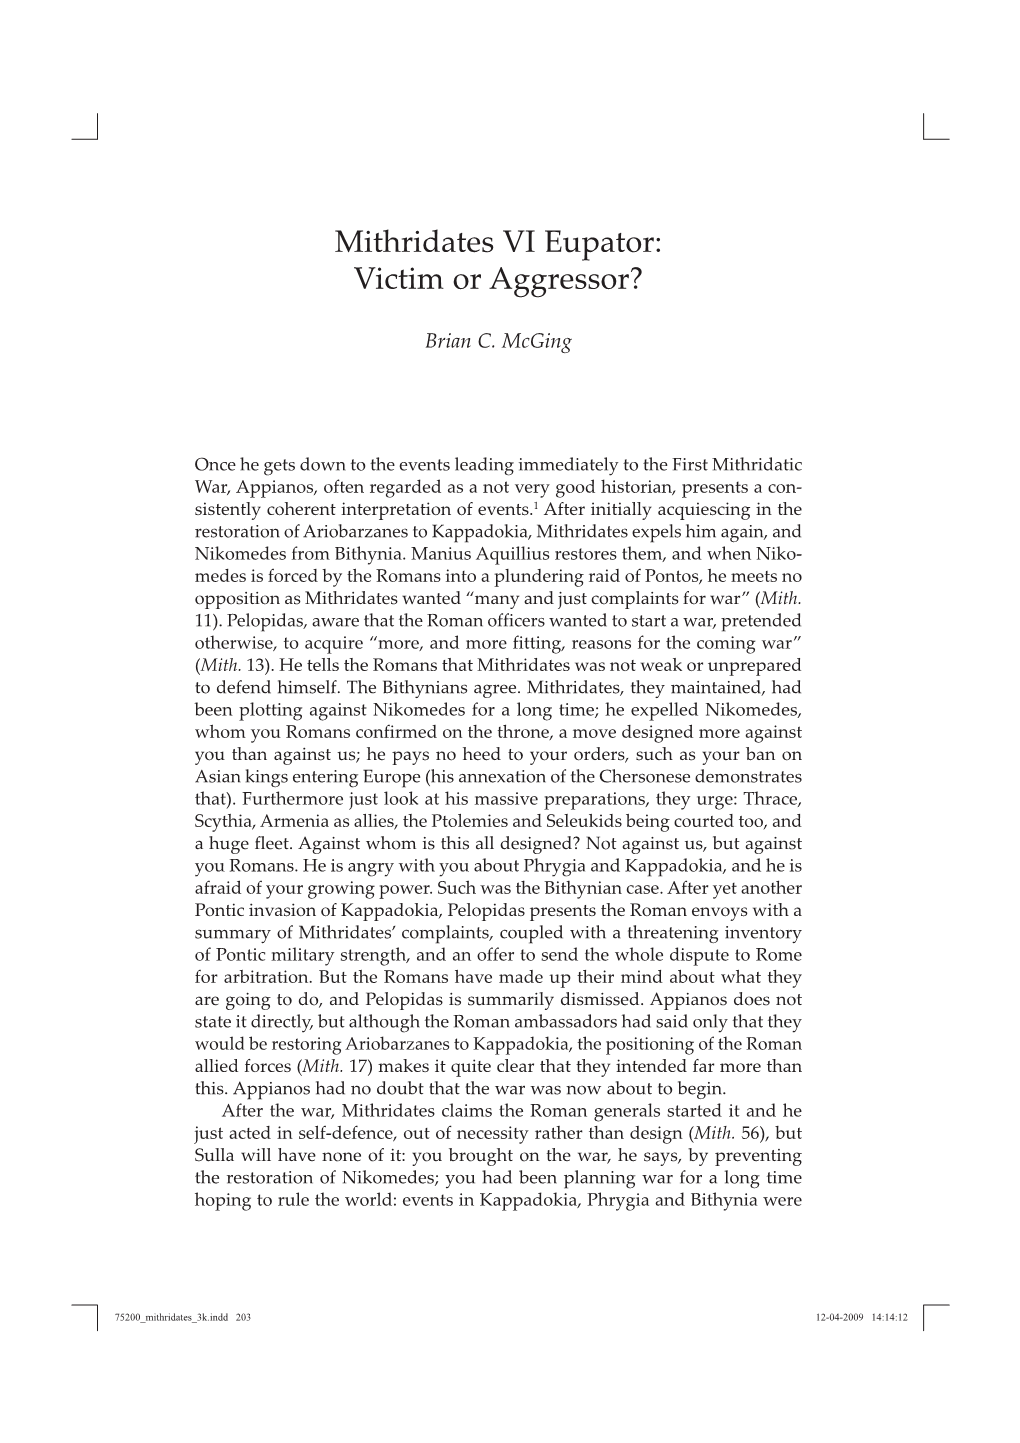 Mithridates VI Eupator: Victim Or Aggressor?